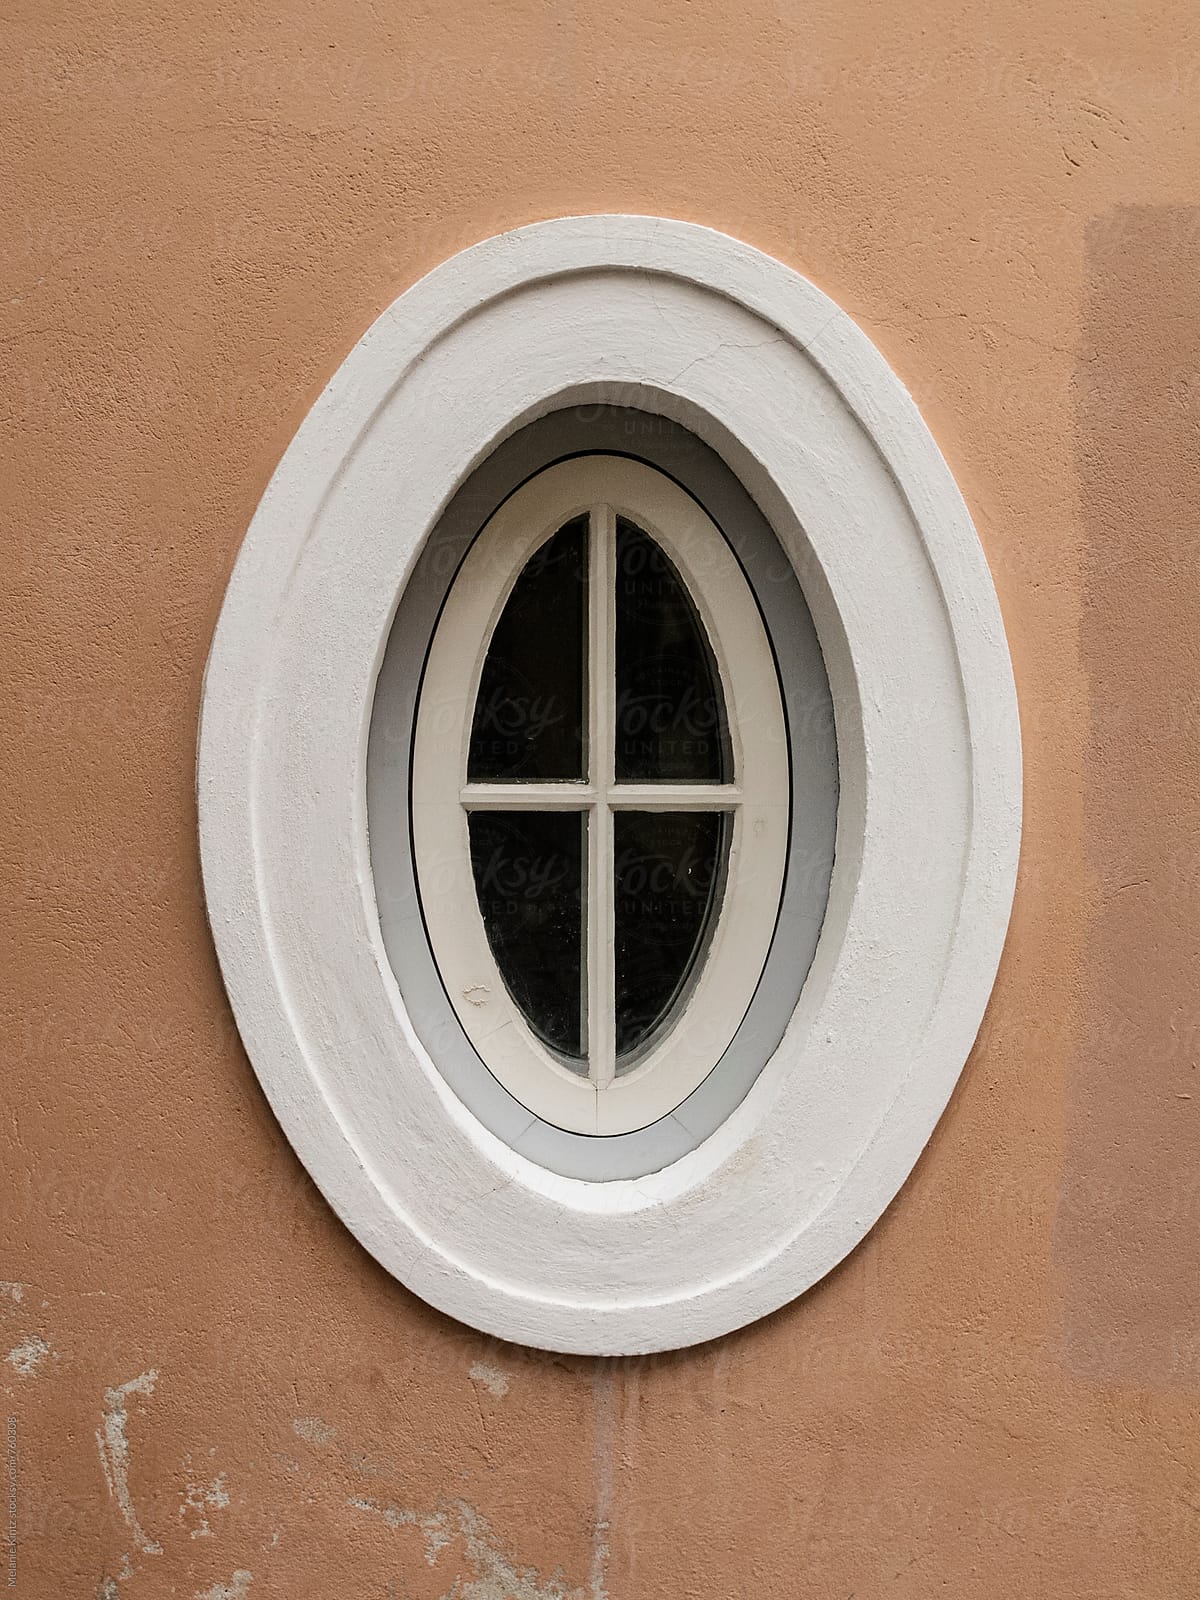 Oval window in brown wall